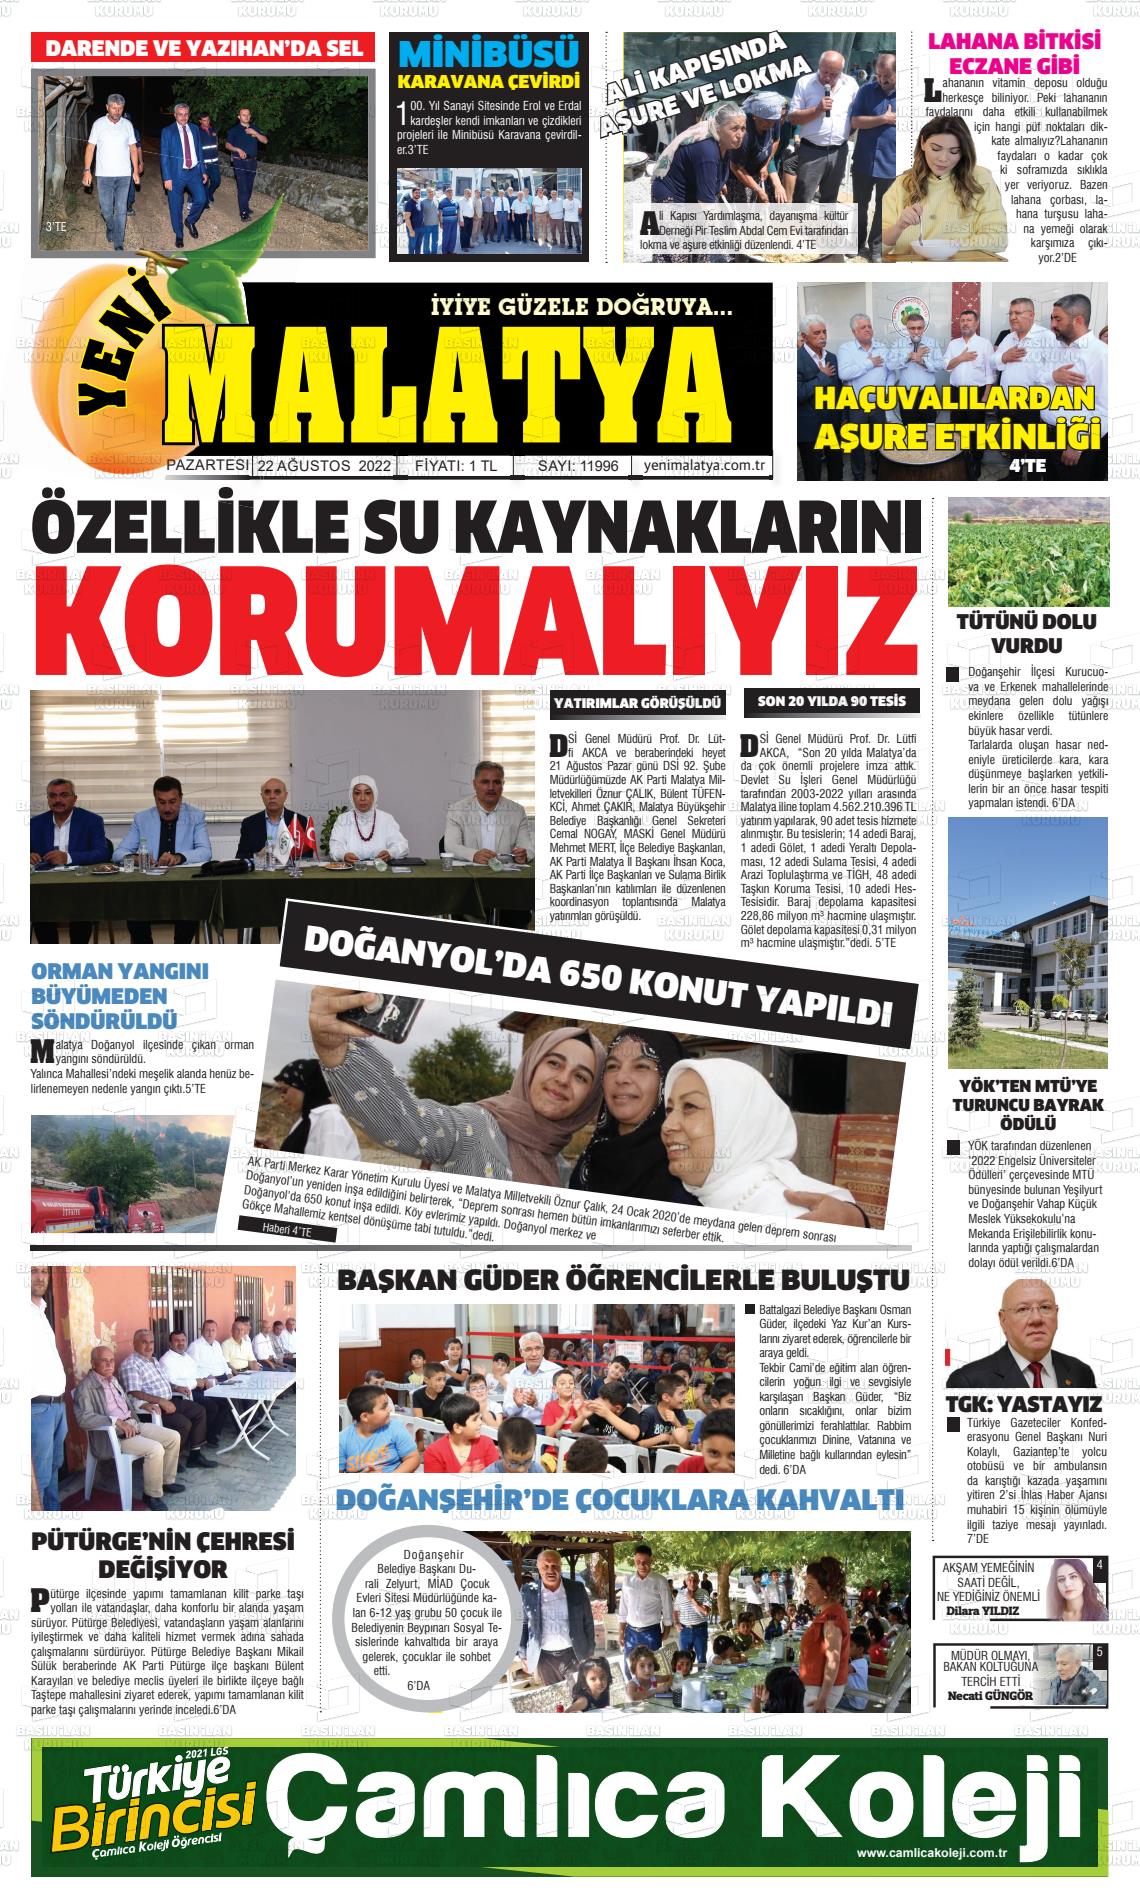 22 Ağustos 2022 Yeni Malatya Gazete Manşeti